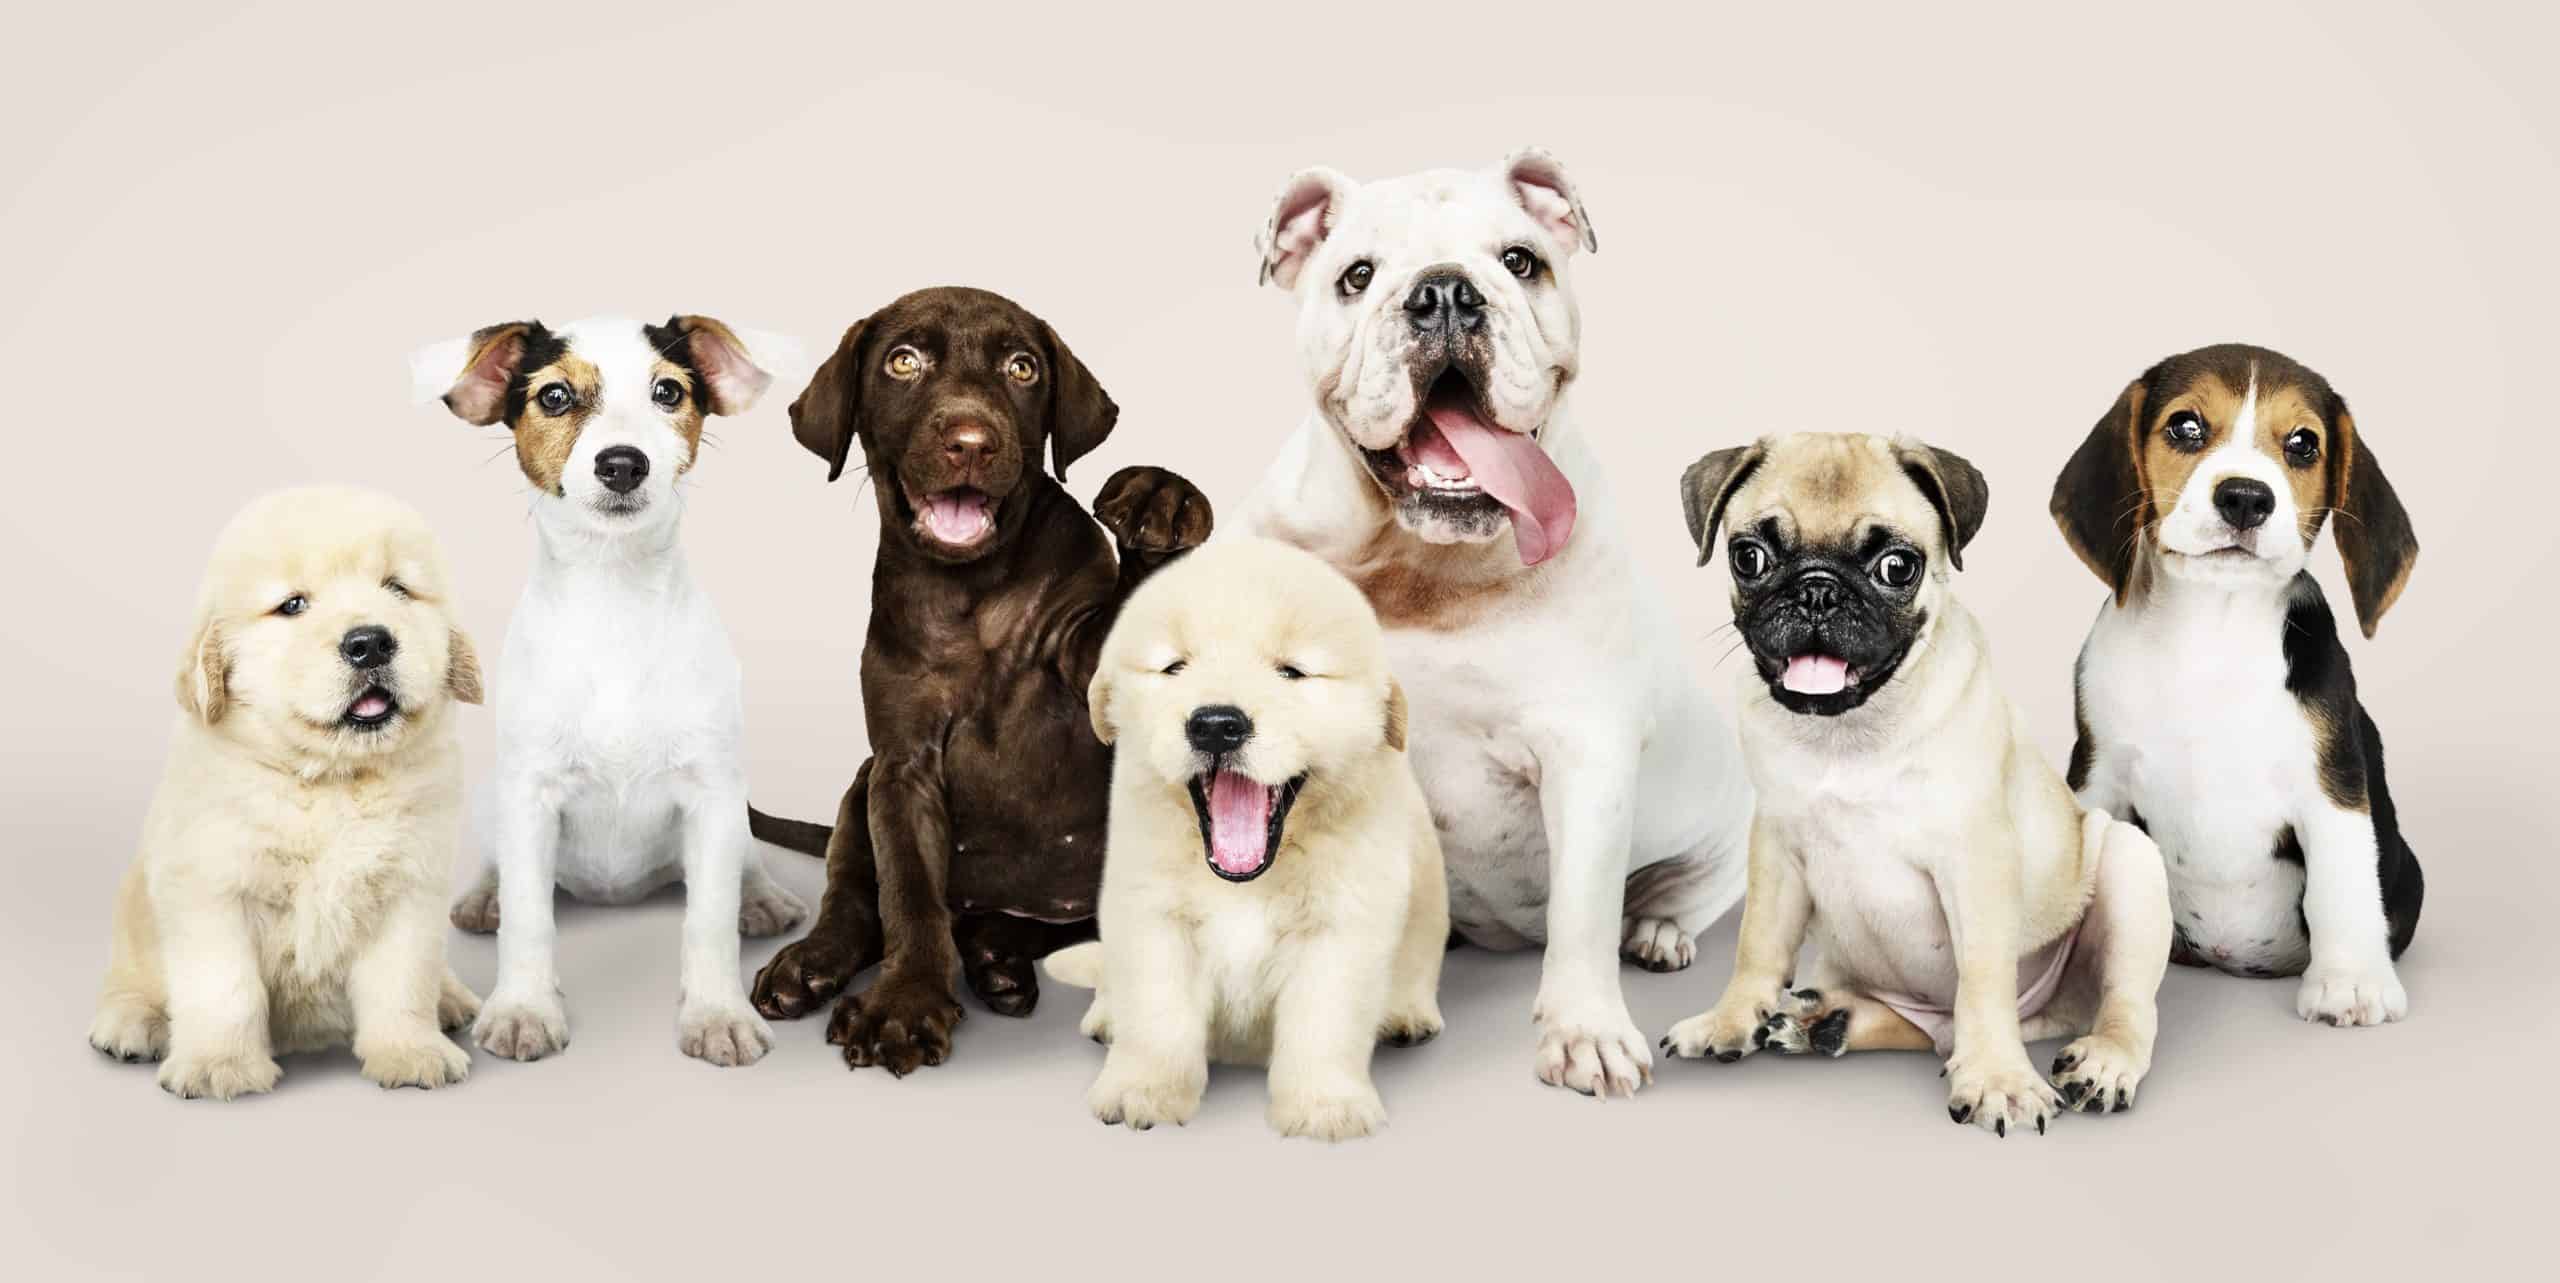 Collection of adorable puppies including Golden Retriever, Jack Russell Terrier, Chocolate Labrador Retriever, Bulldog, Pug, and Beagle.